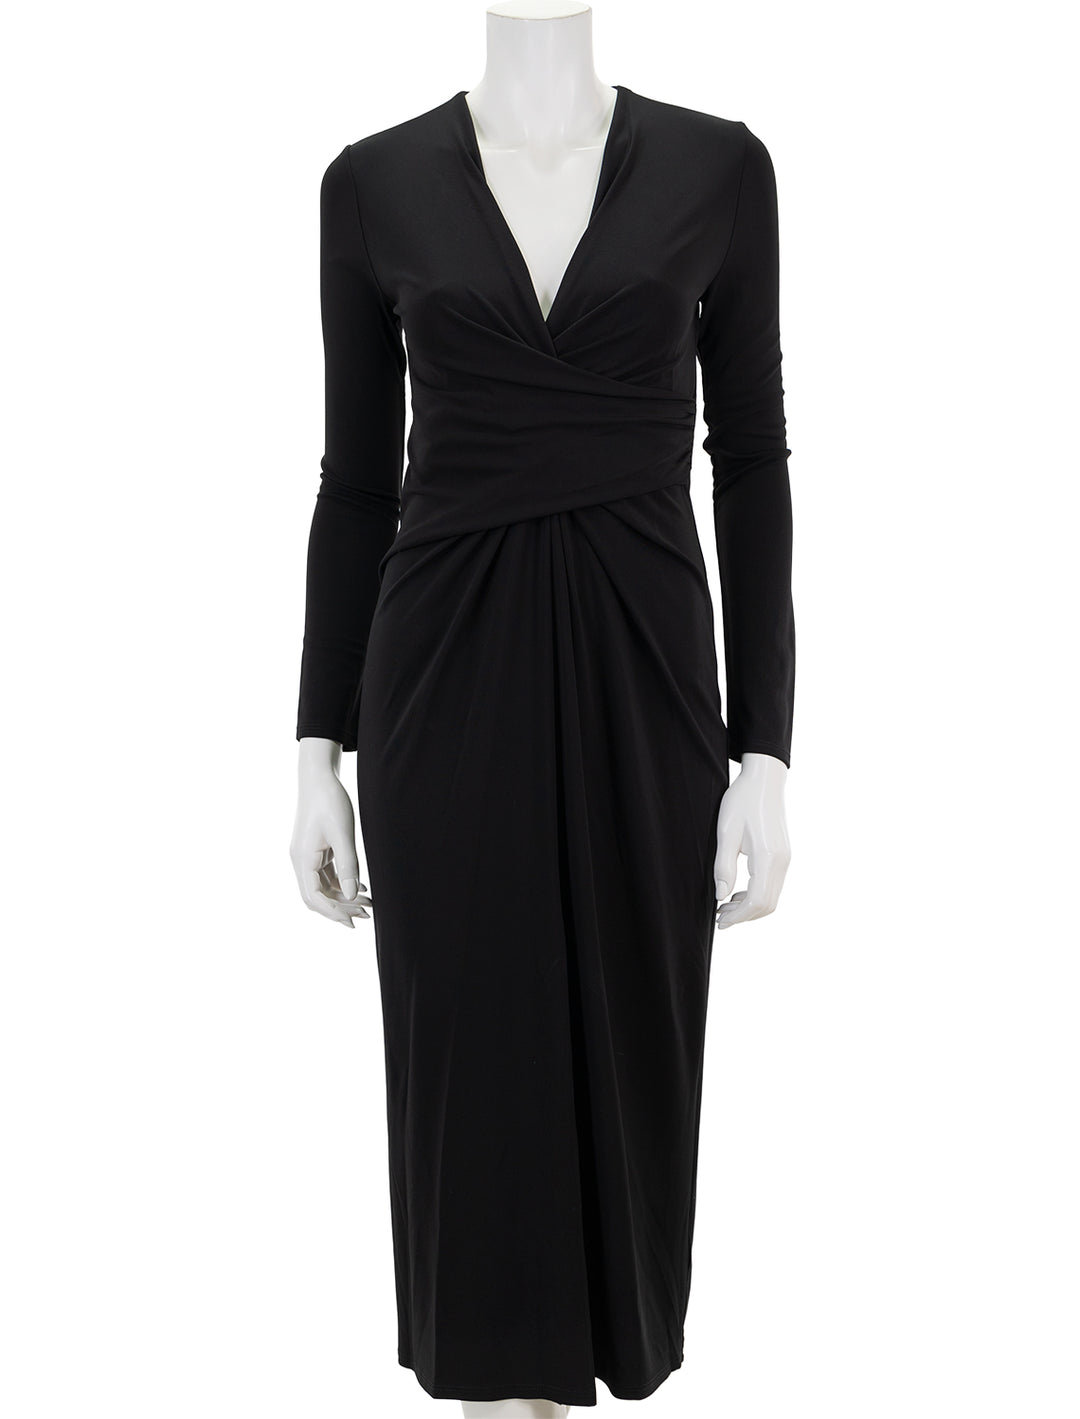 Front view of Velvet by Graham & Spencer's Eliana Dress in Black Matte Jersey.